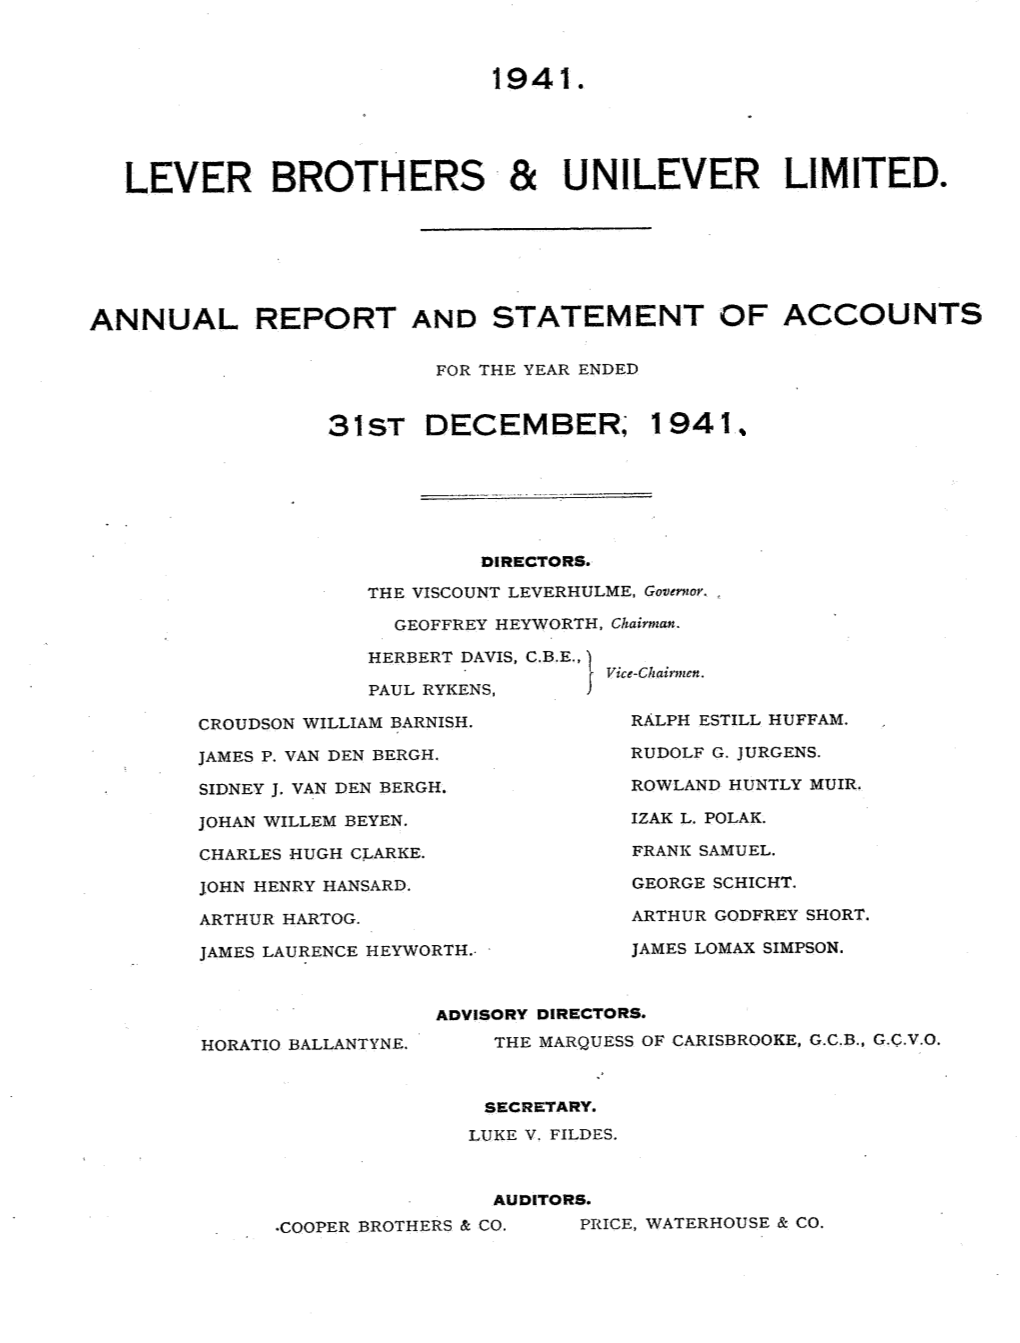 1941 Annual Report